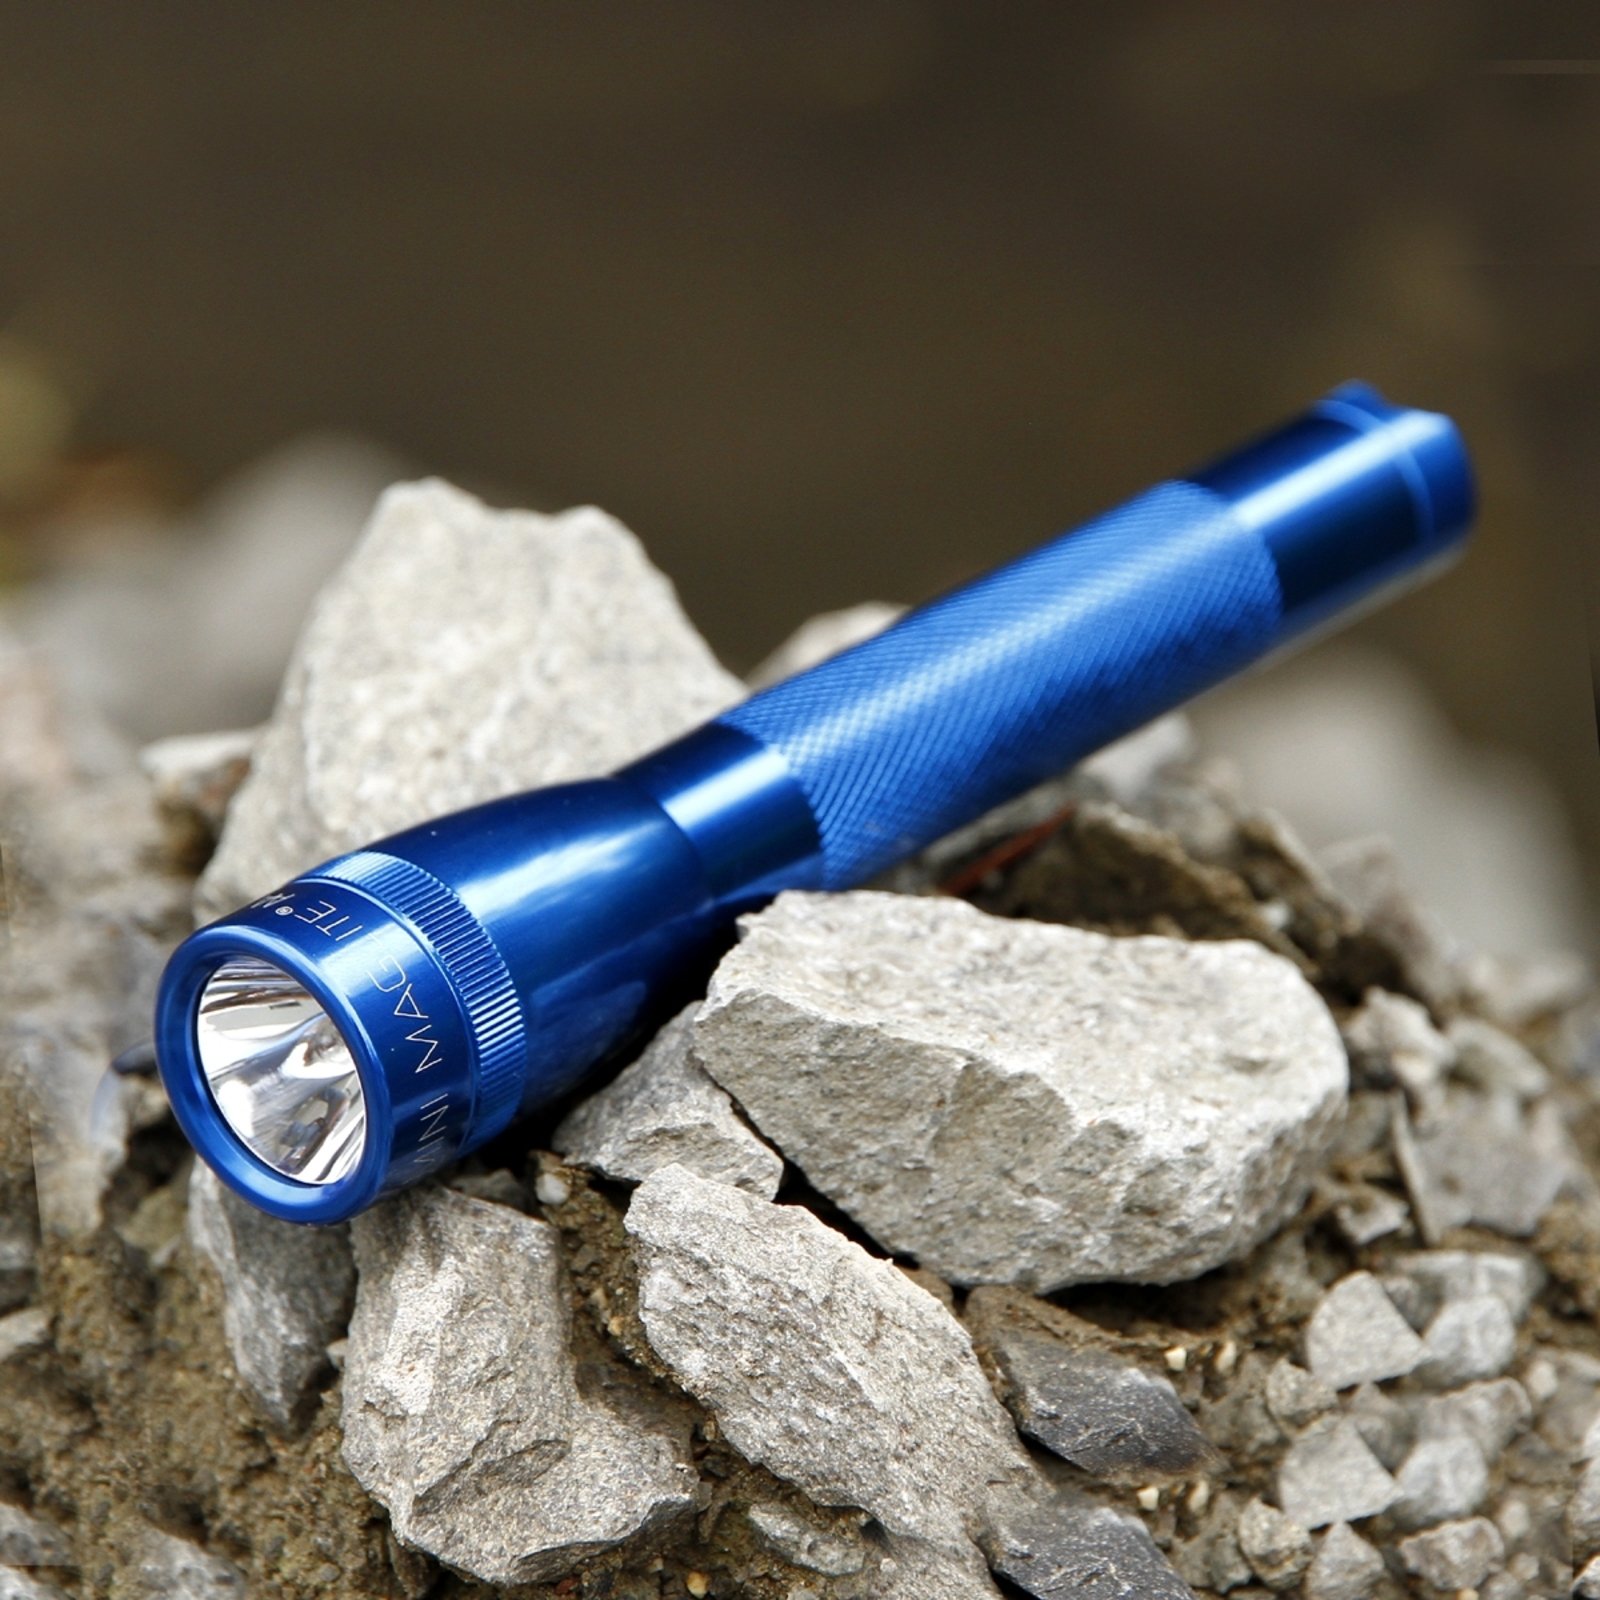 Práctica linterna Mini-Maglite 2AA-Cell, azul